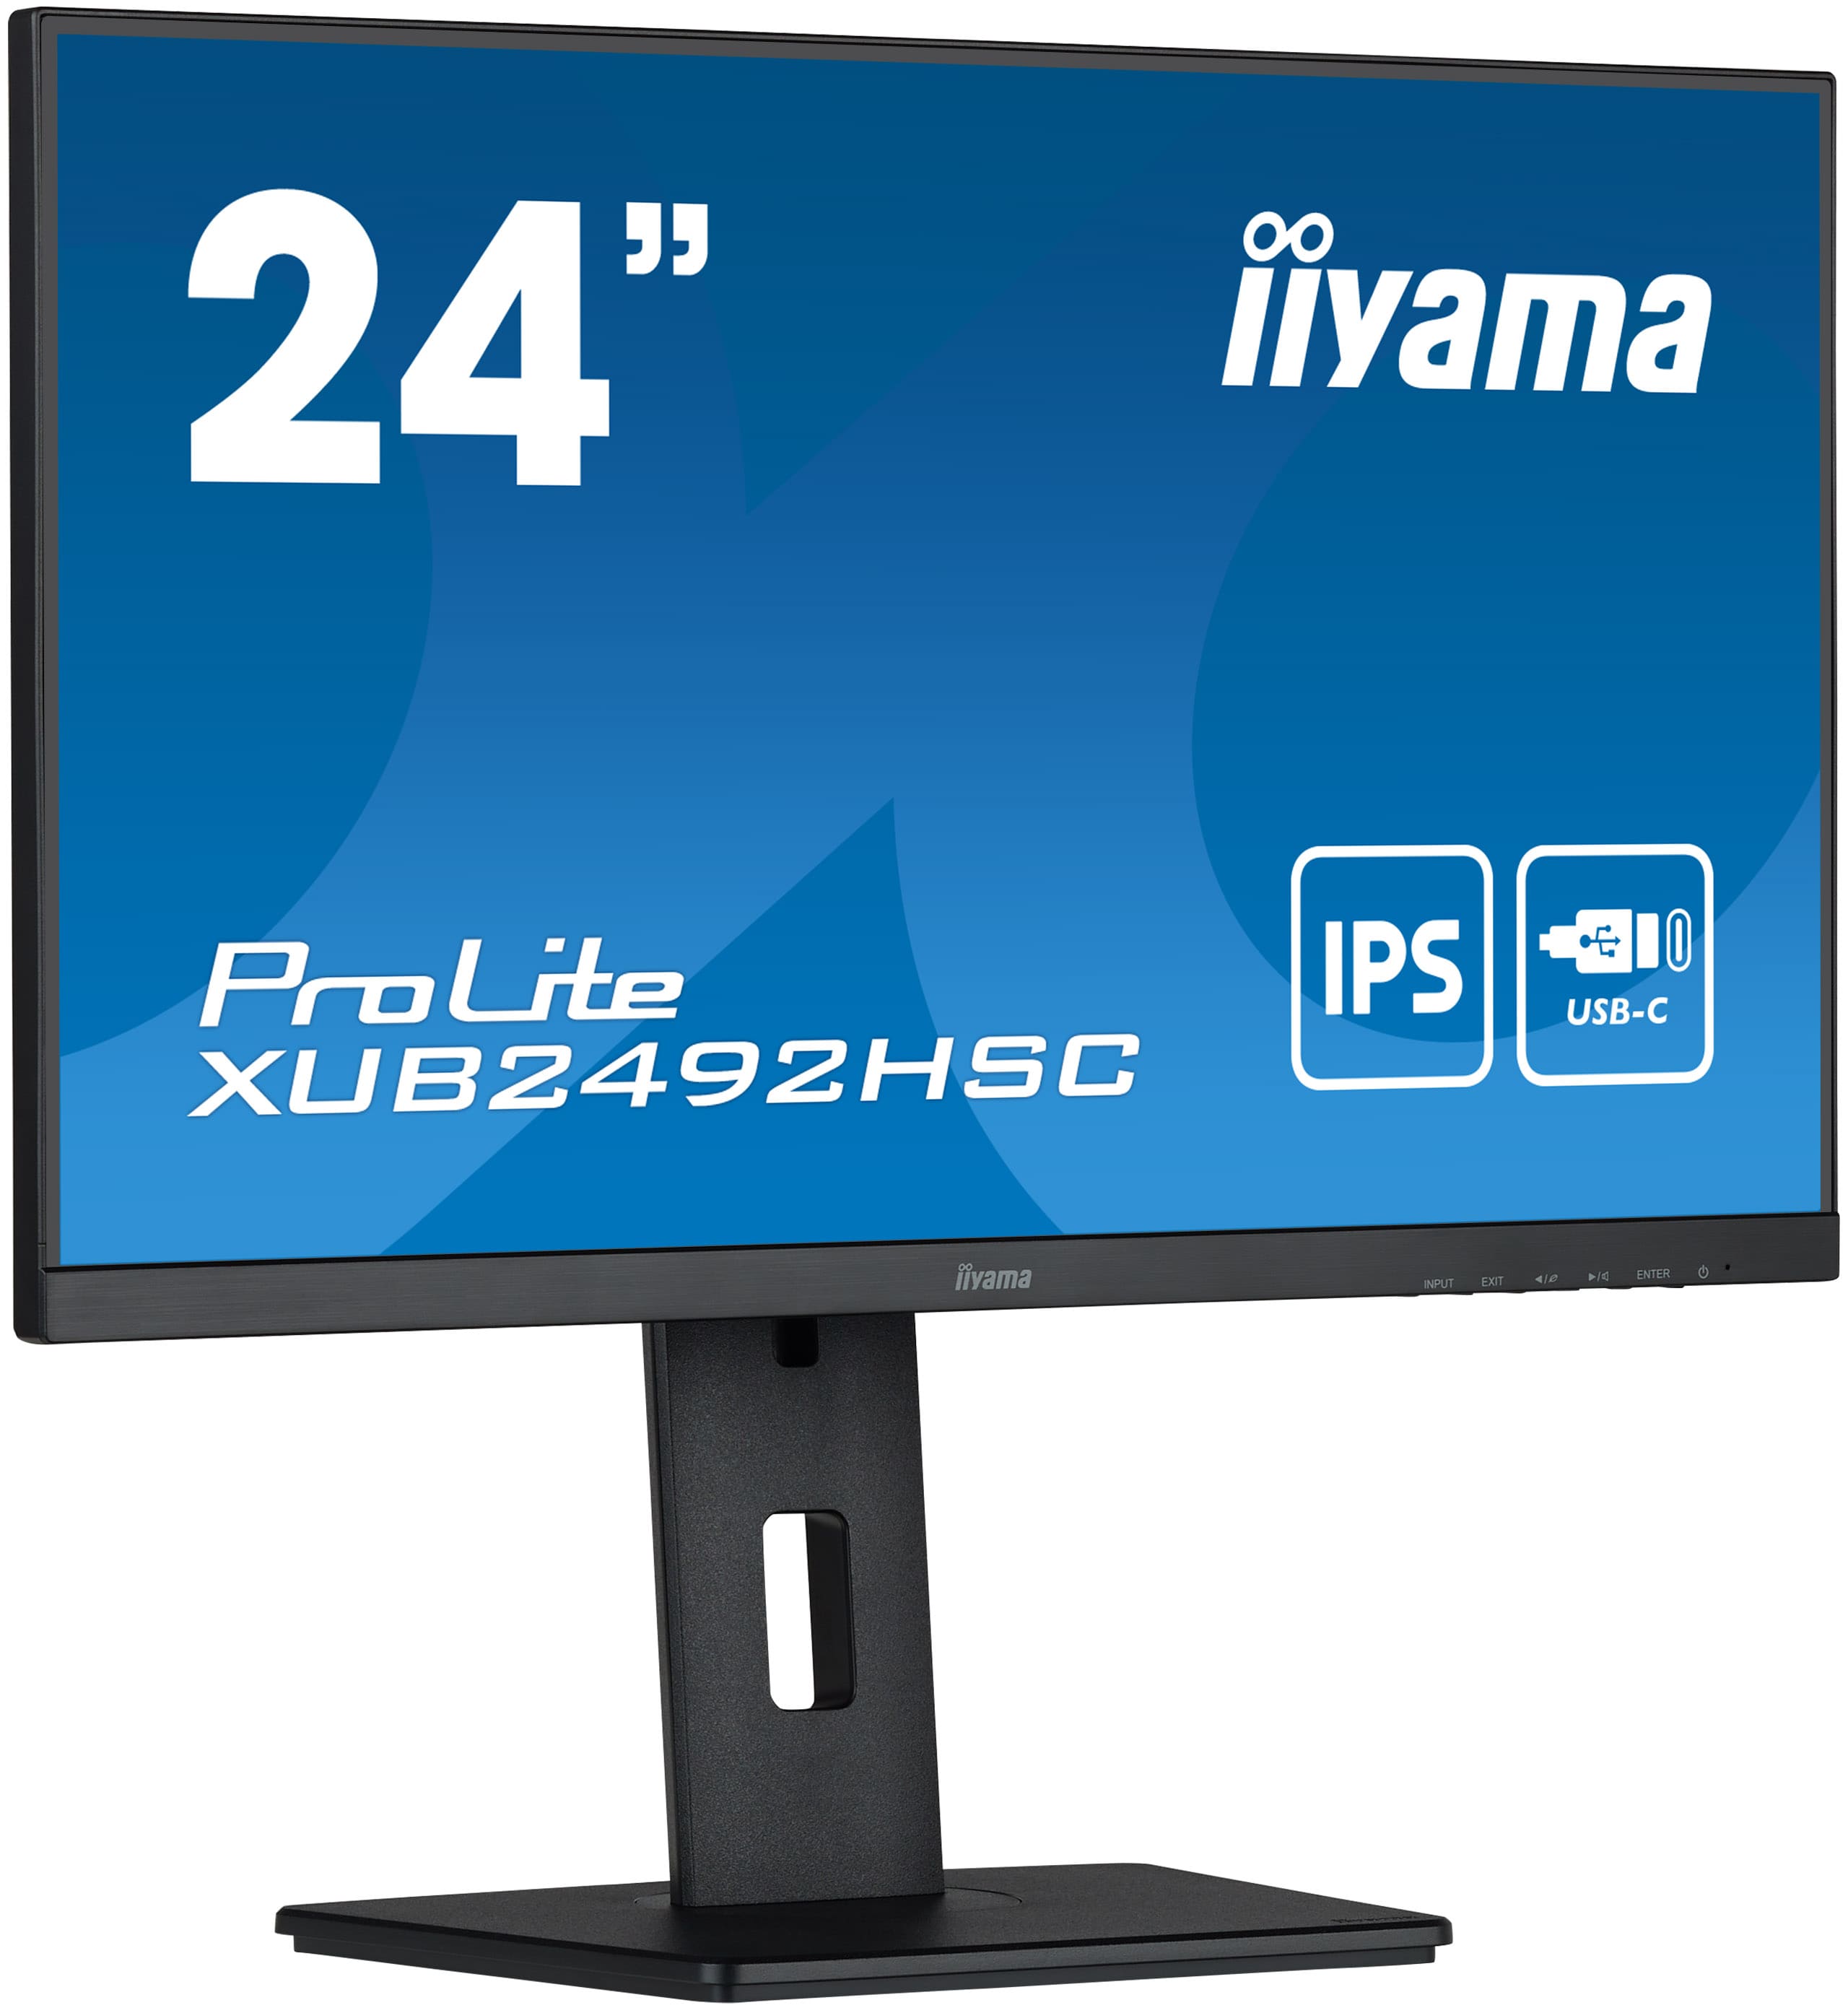 Iiyama ProLite XUB2492HSC-B5 | 24" | Monitor mit USB-C Anschluss